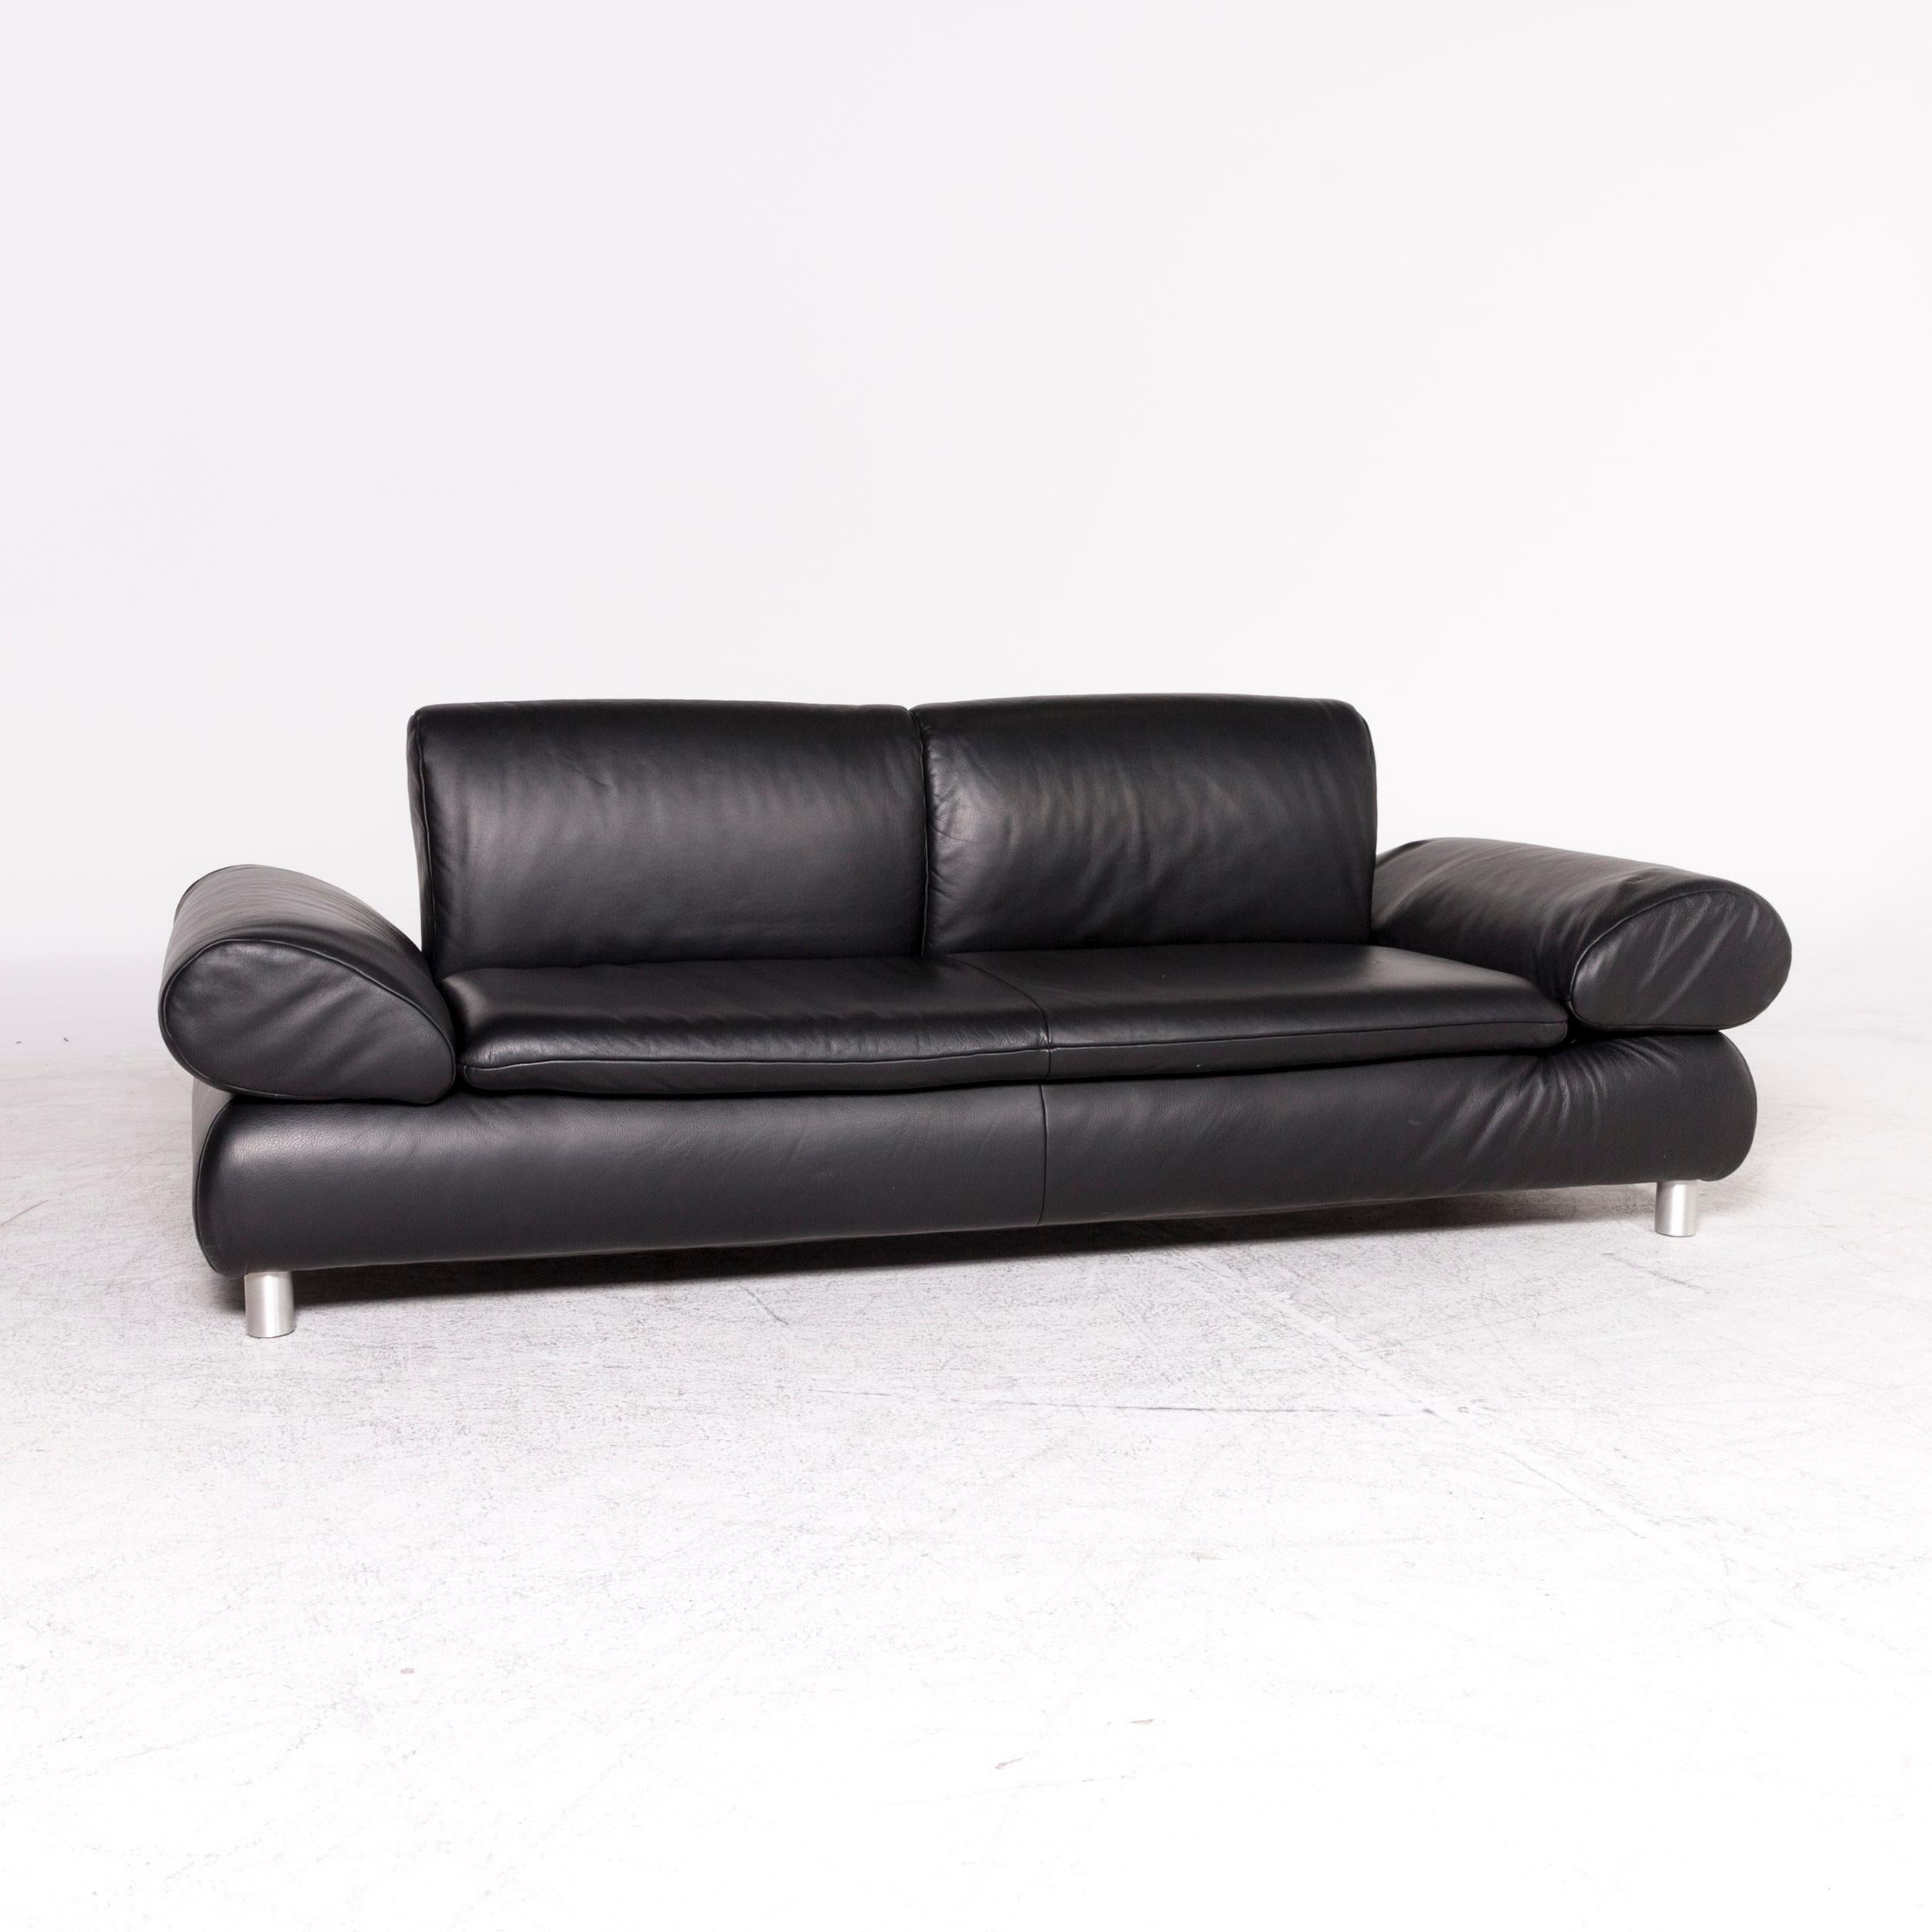 German Koinor Donna Designer Leather Sofa Stool Set Black Genuine Leather Two-Seat For Sale